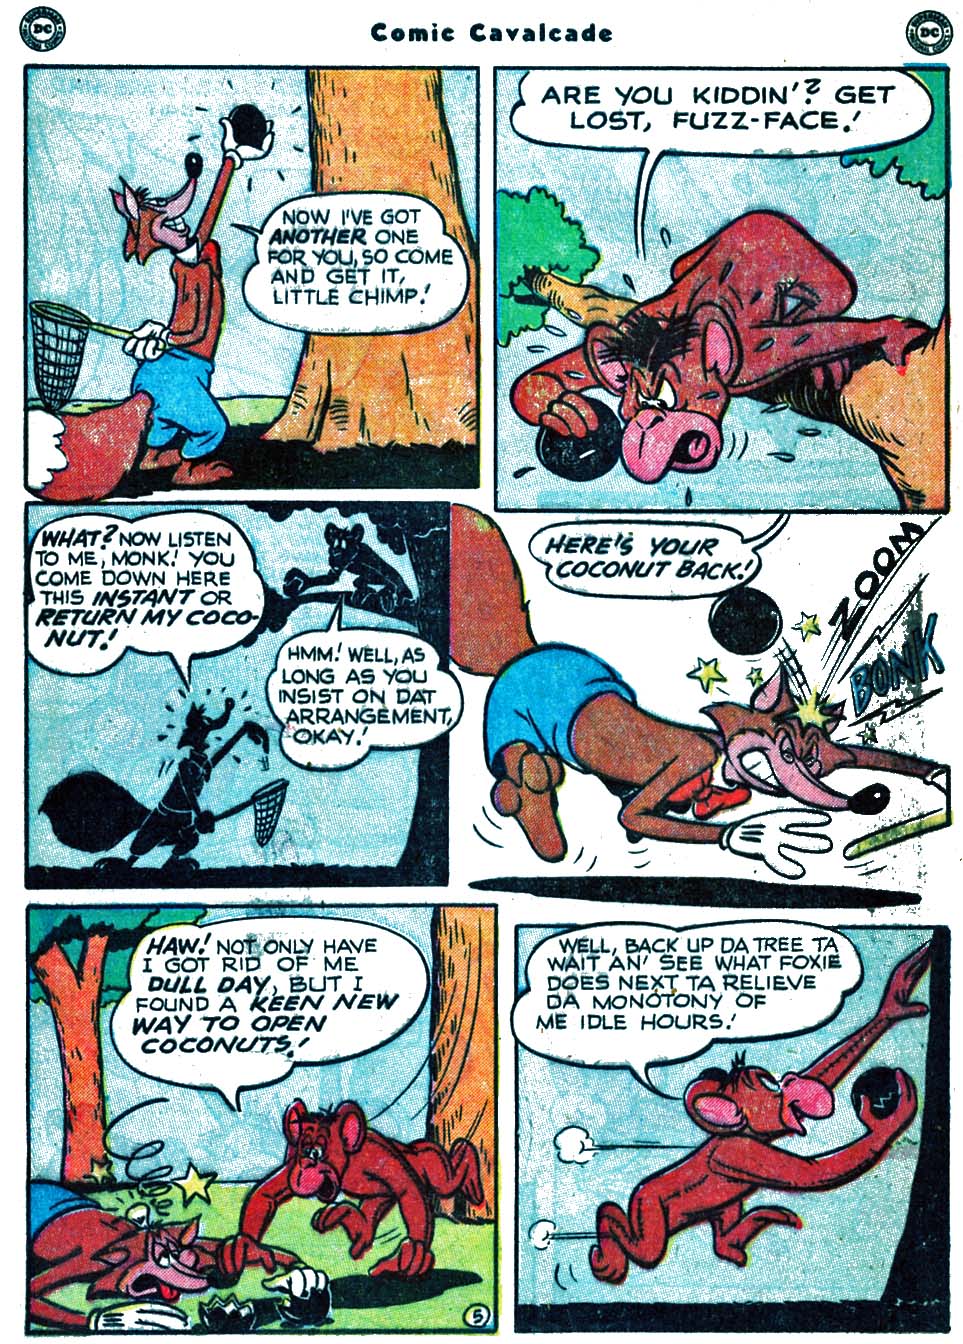 Comic Cavalcade issue 42 - Page 7